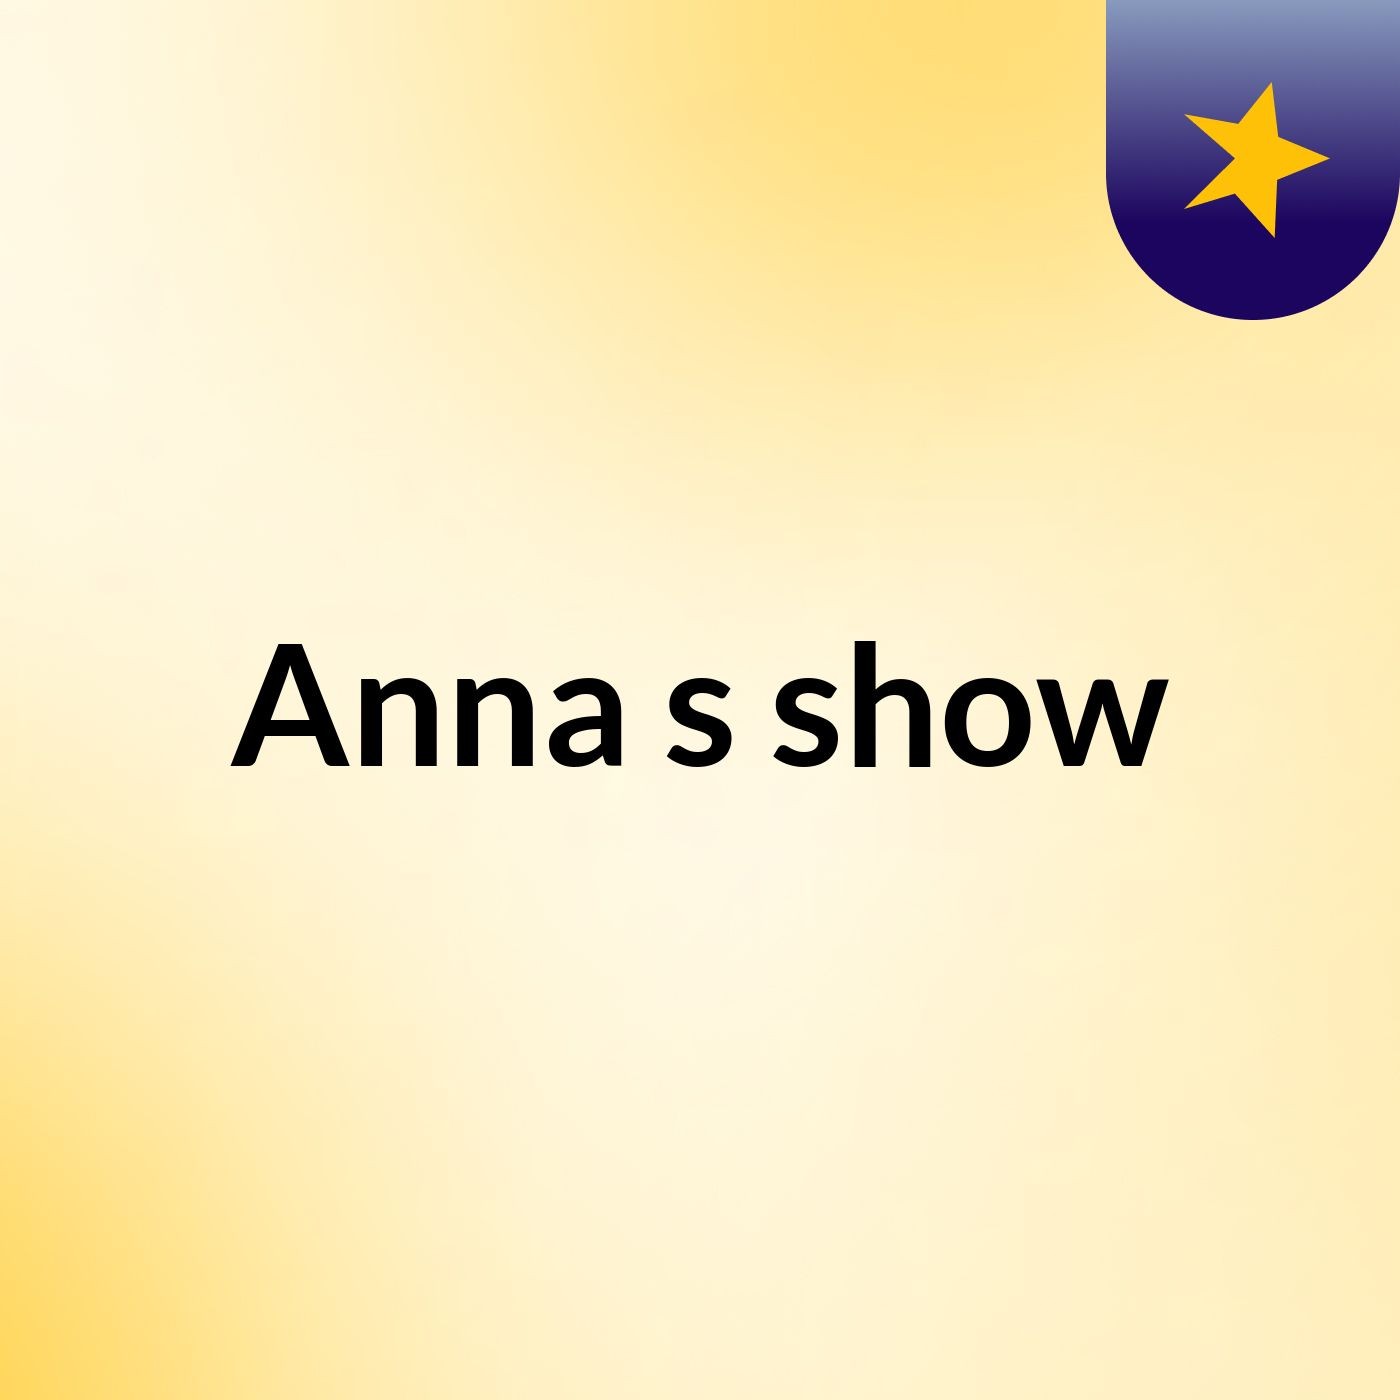 Anna's show